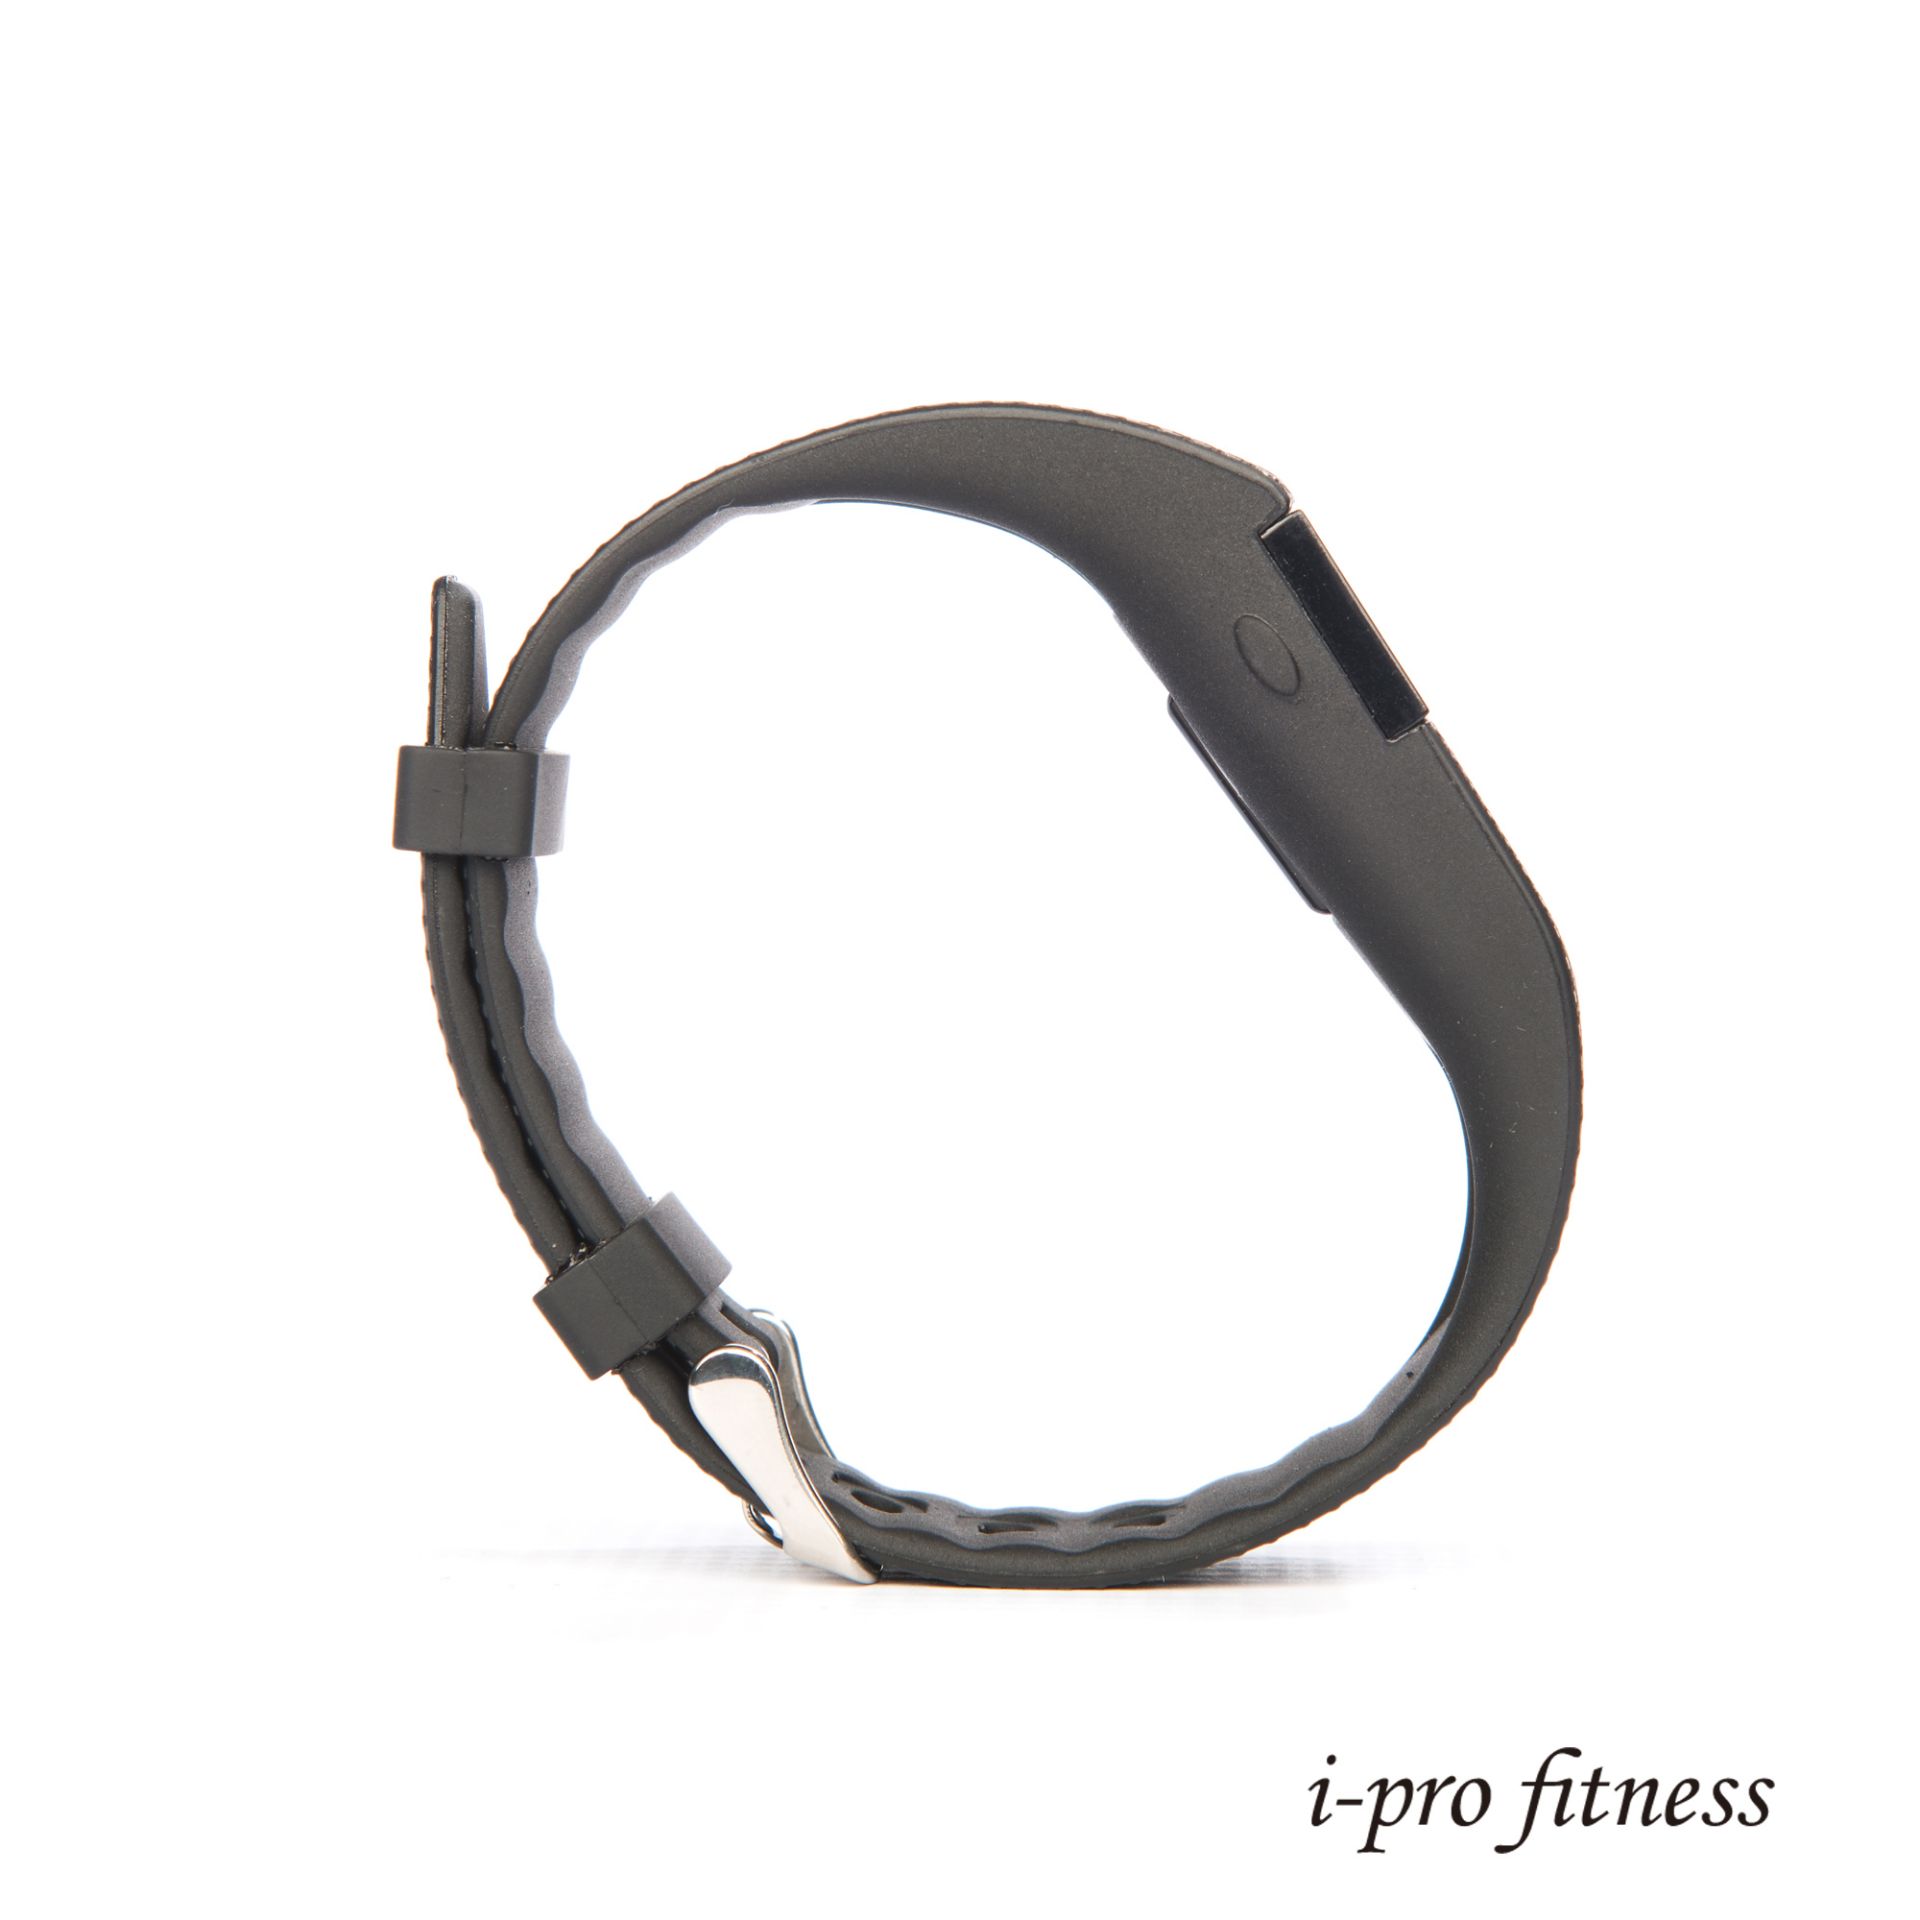 10x Fitness Tracker i-pro fitness, Bluetooth 4.0 Sports Smart Bracelet, Heart Rate Monitor, - Image 3 of 6